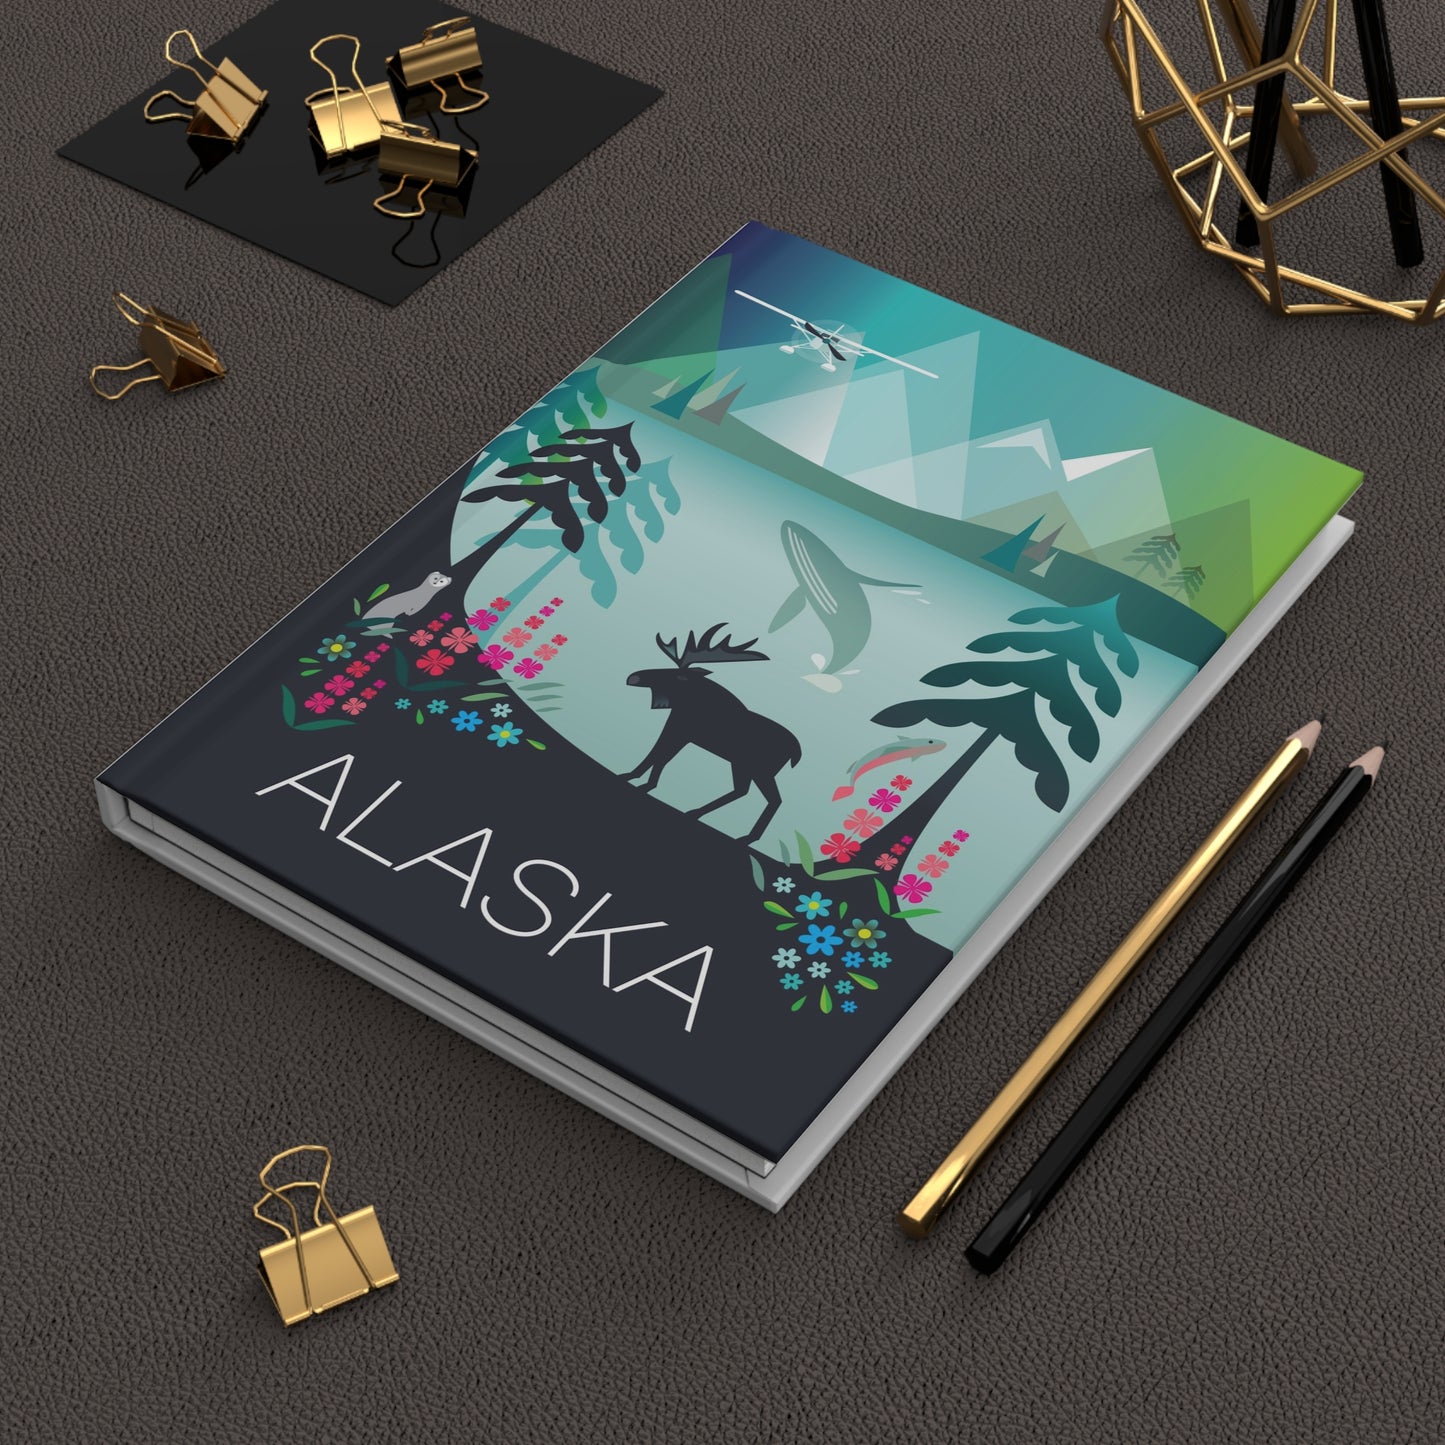 Alaska-Hardcover-Tagebuch